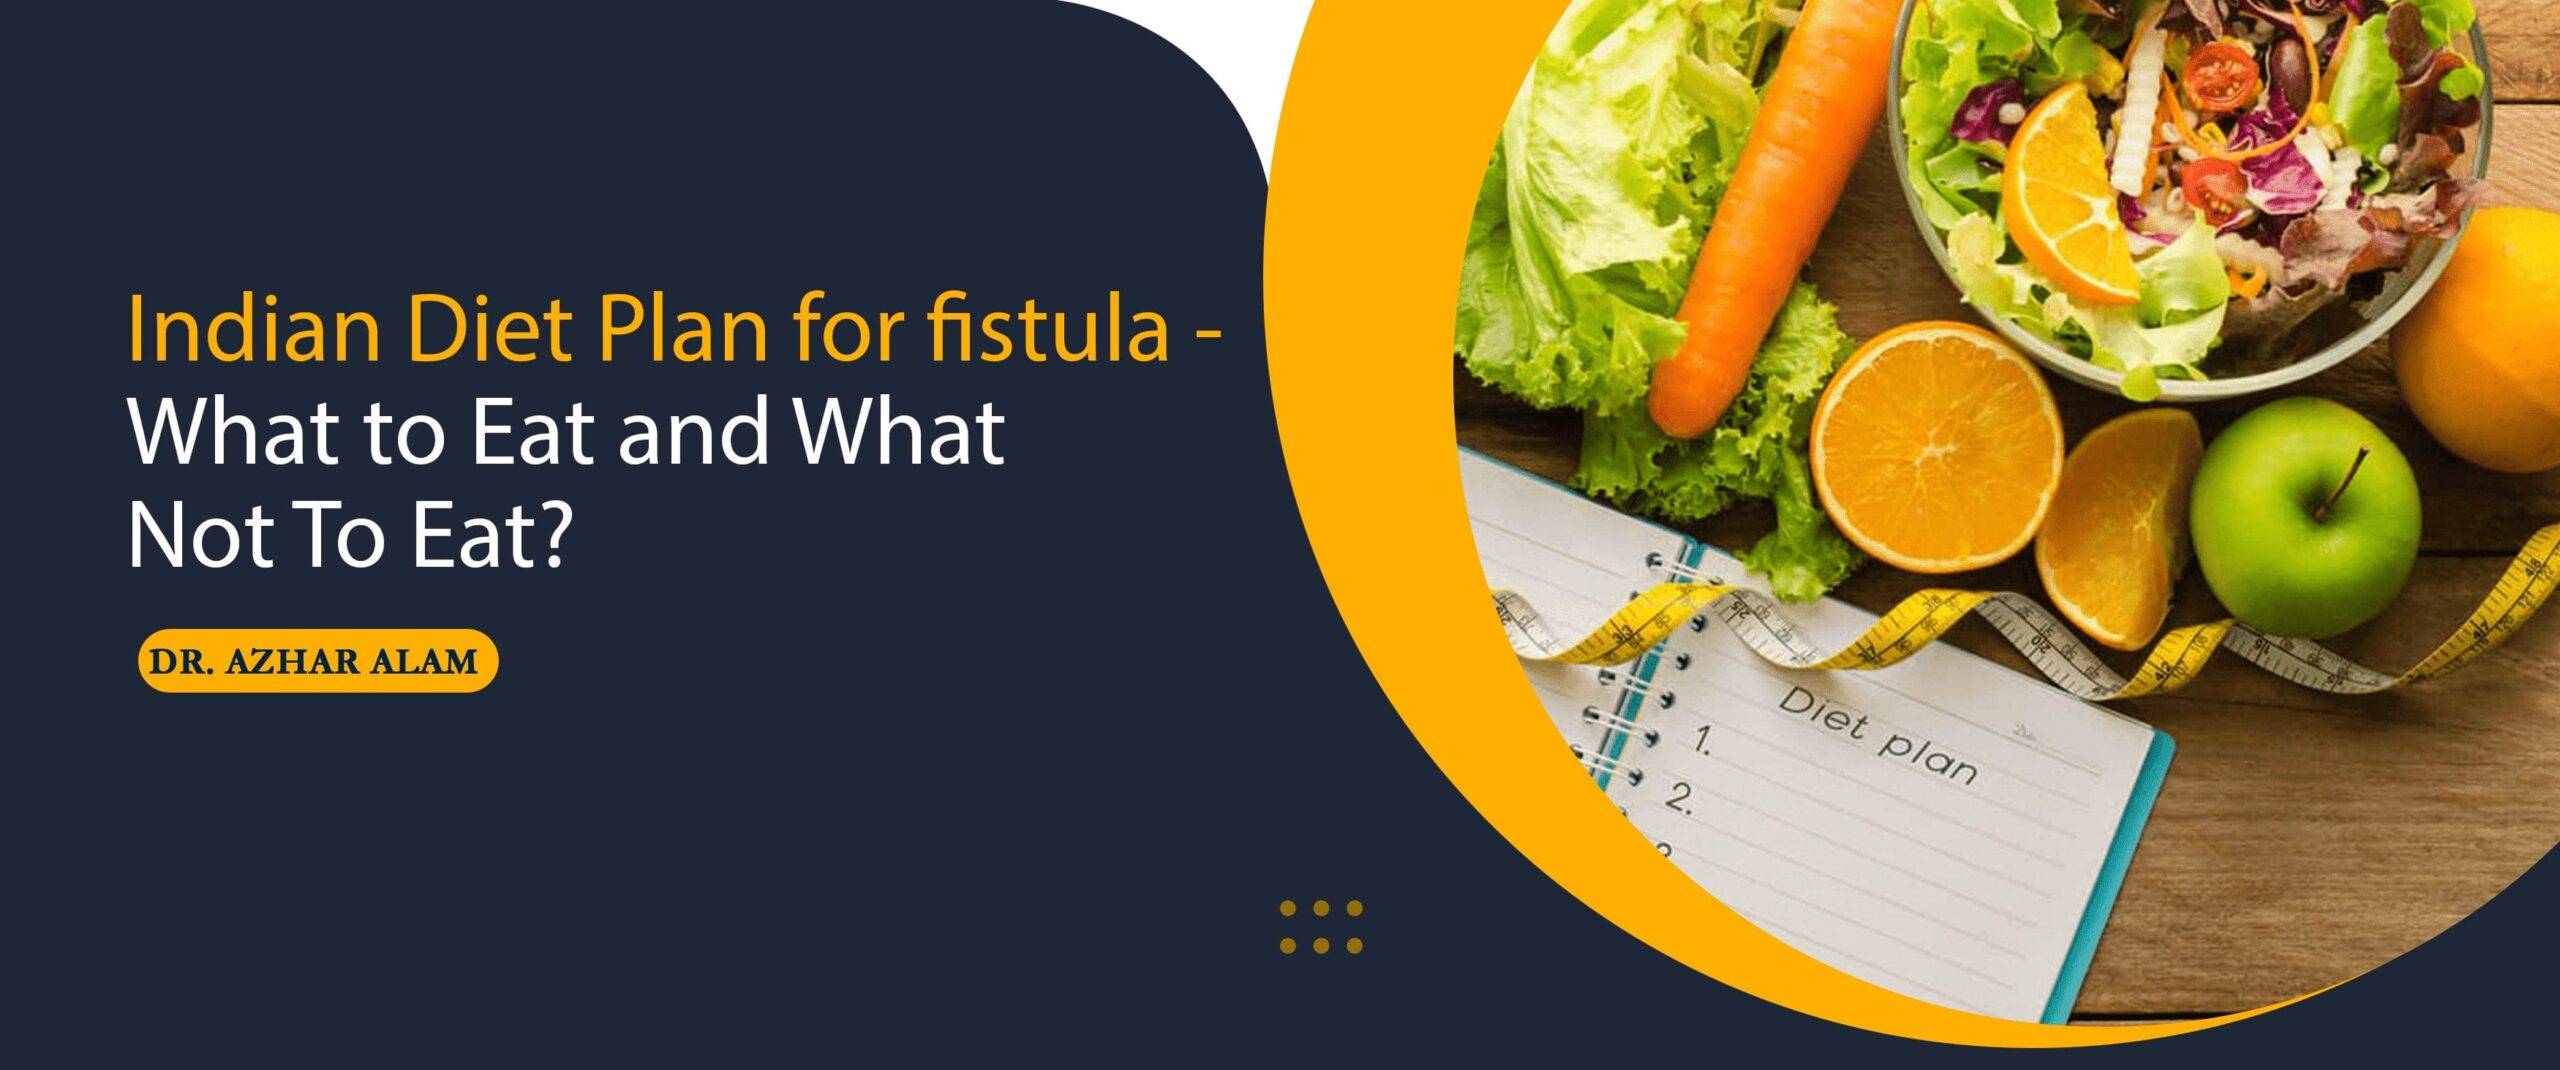 Indian Diet Plan for fistula